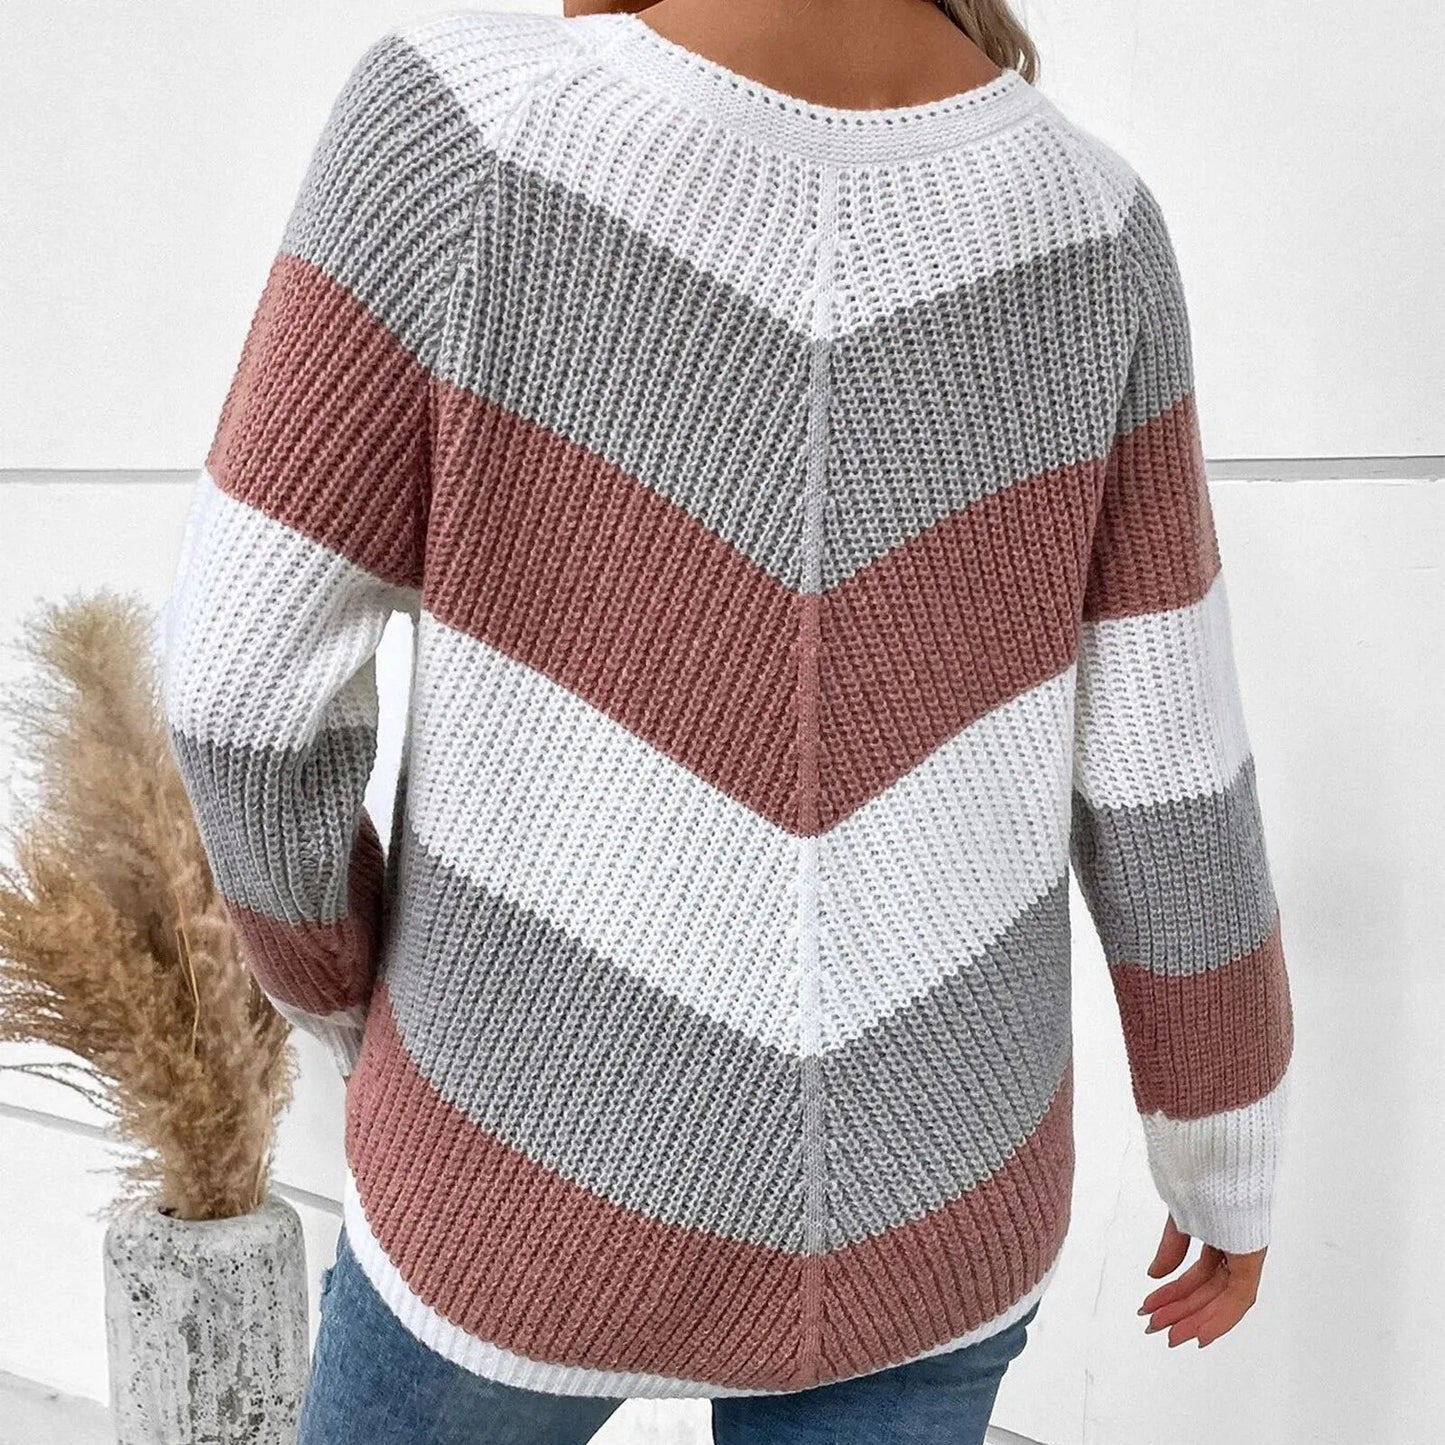 Crochet Big-Striped Sweater